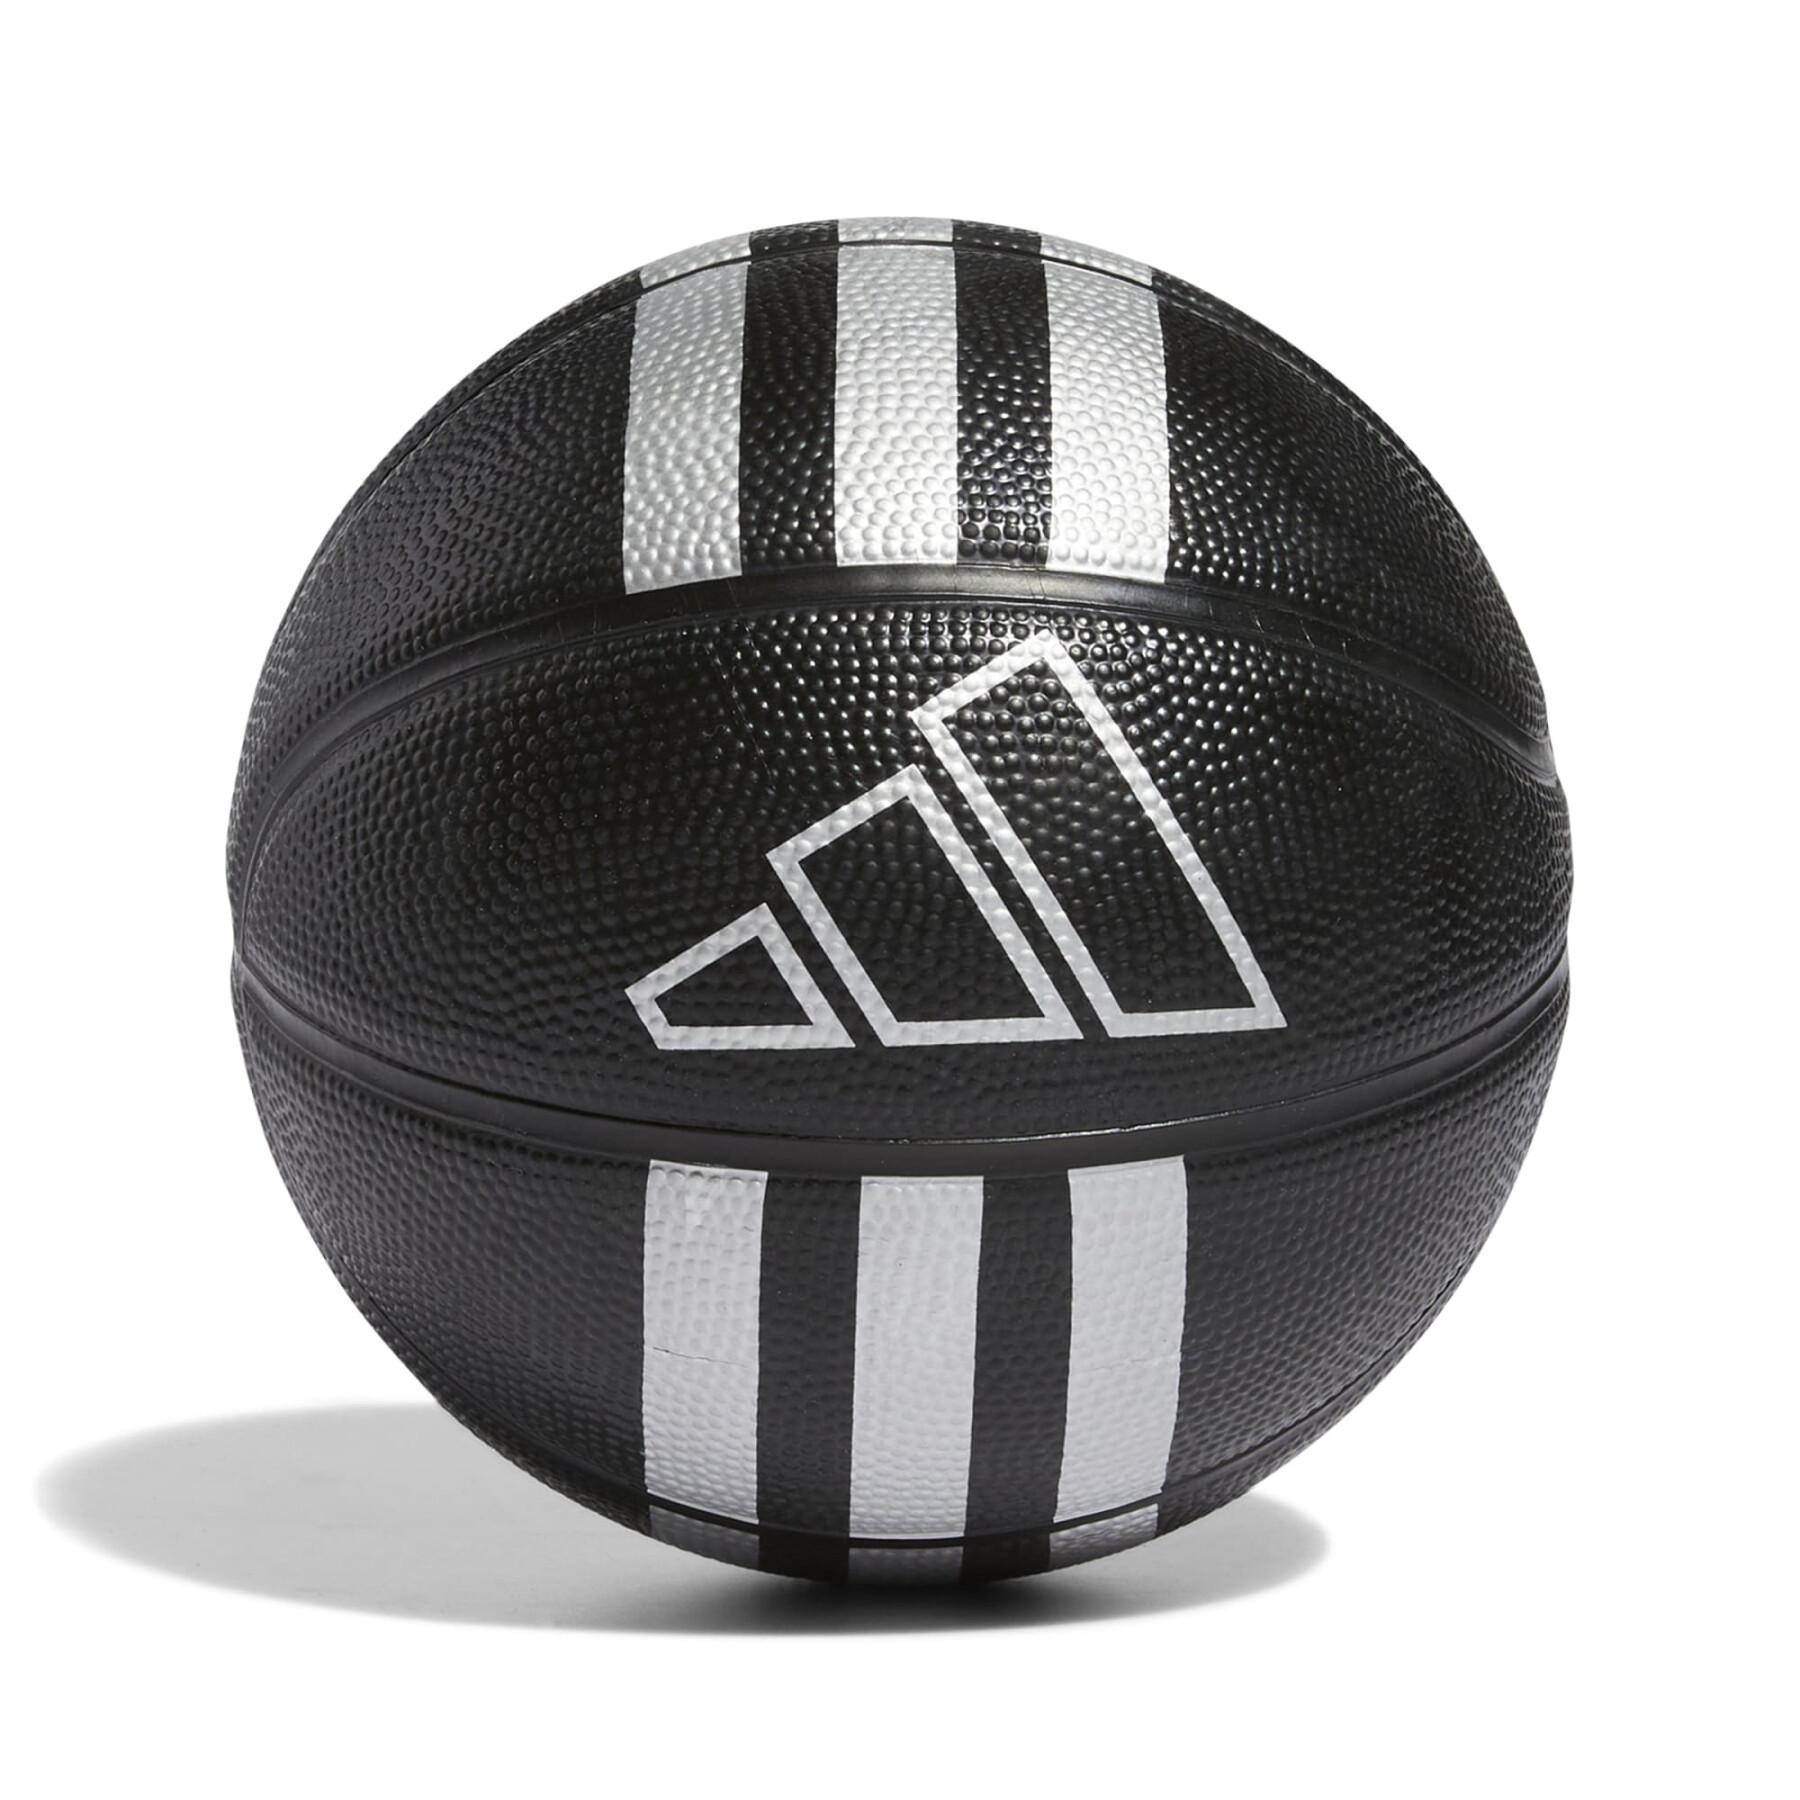 Mini baloncesto adidas